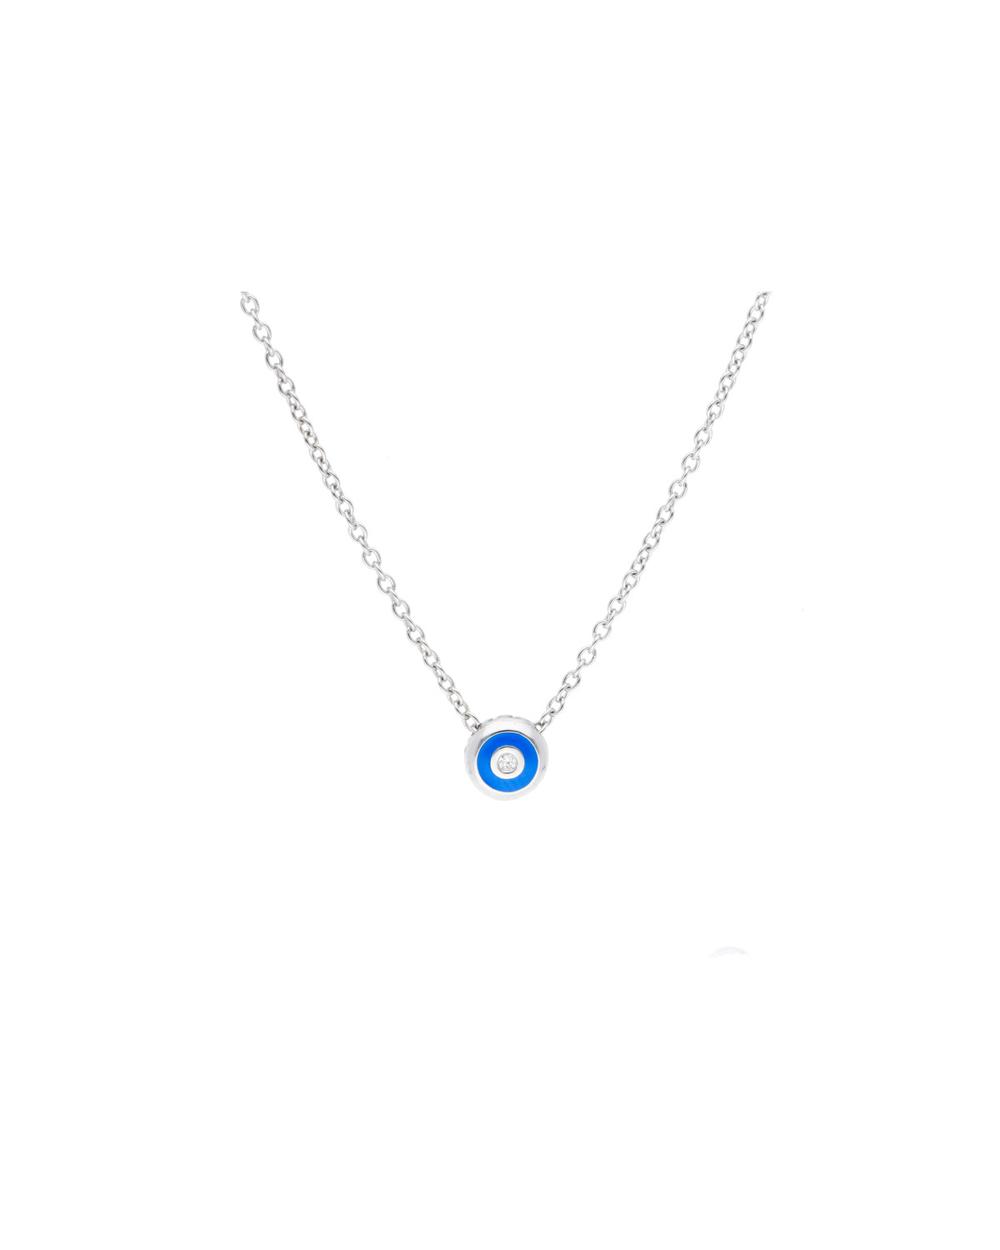 Blue Enamel with One Diamond Pendant